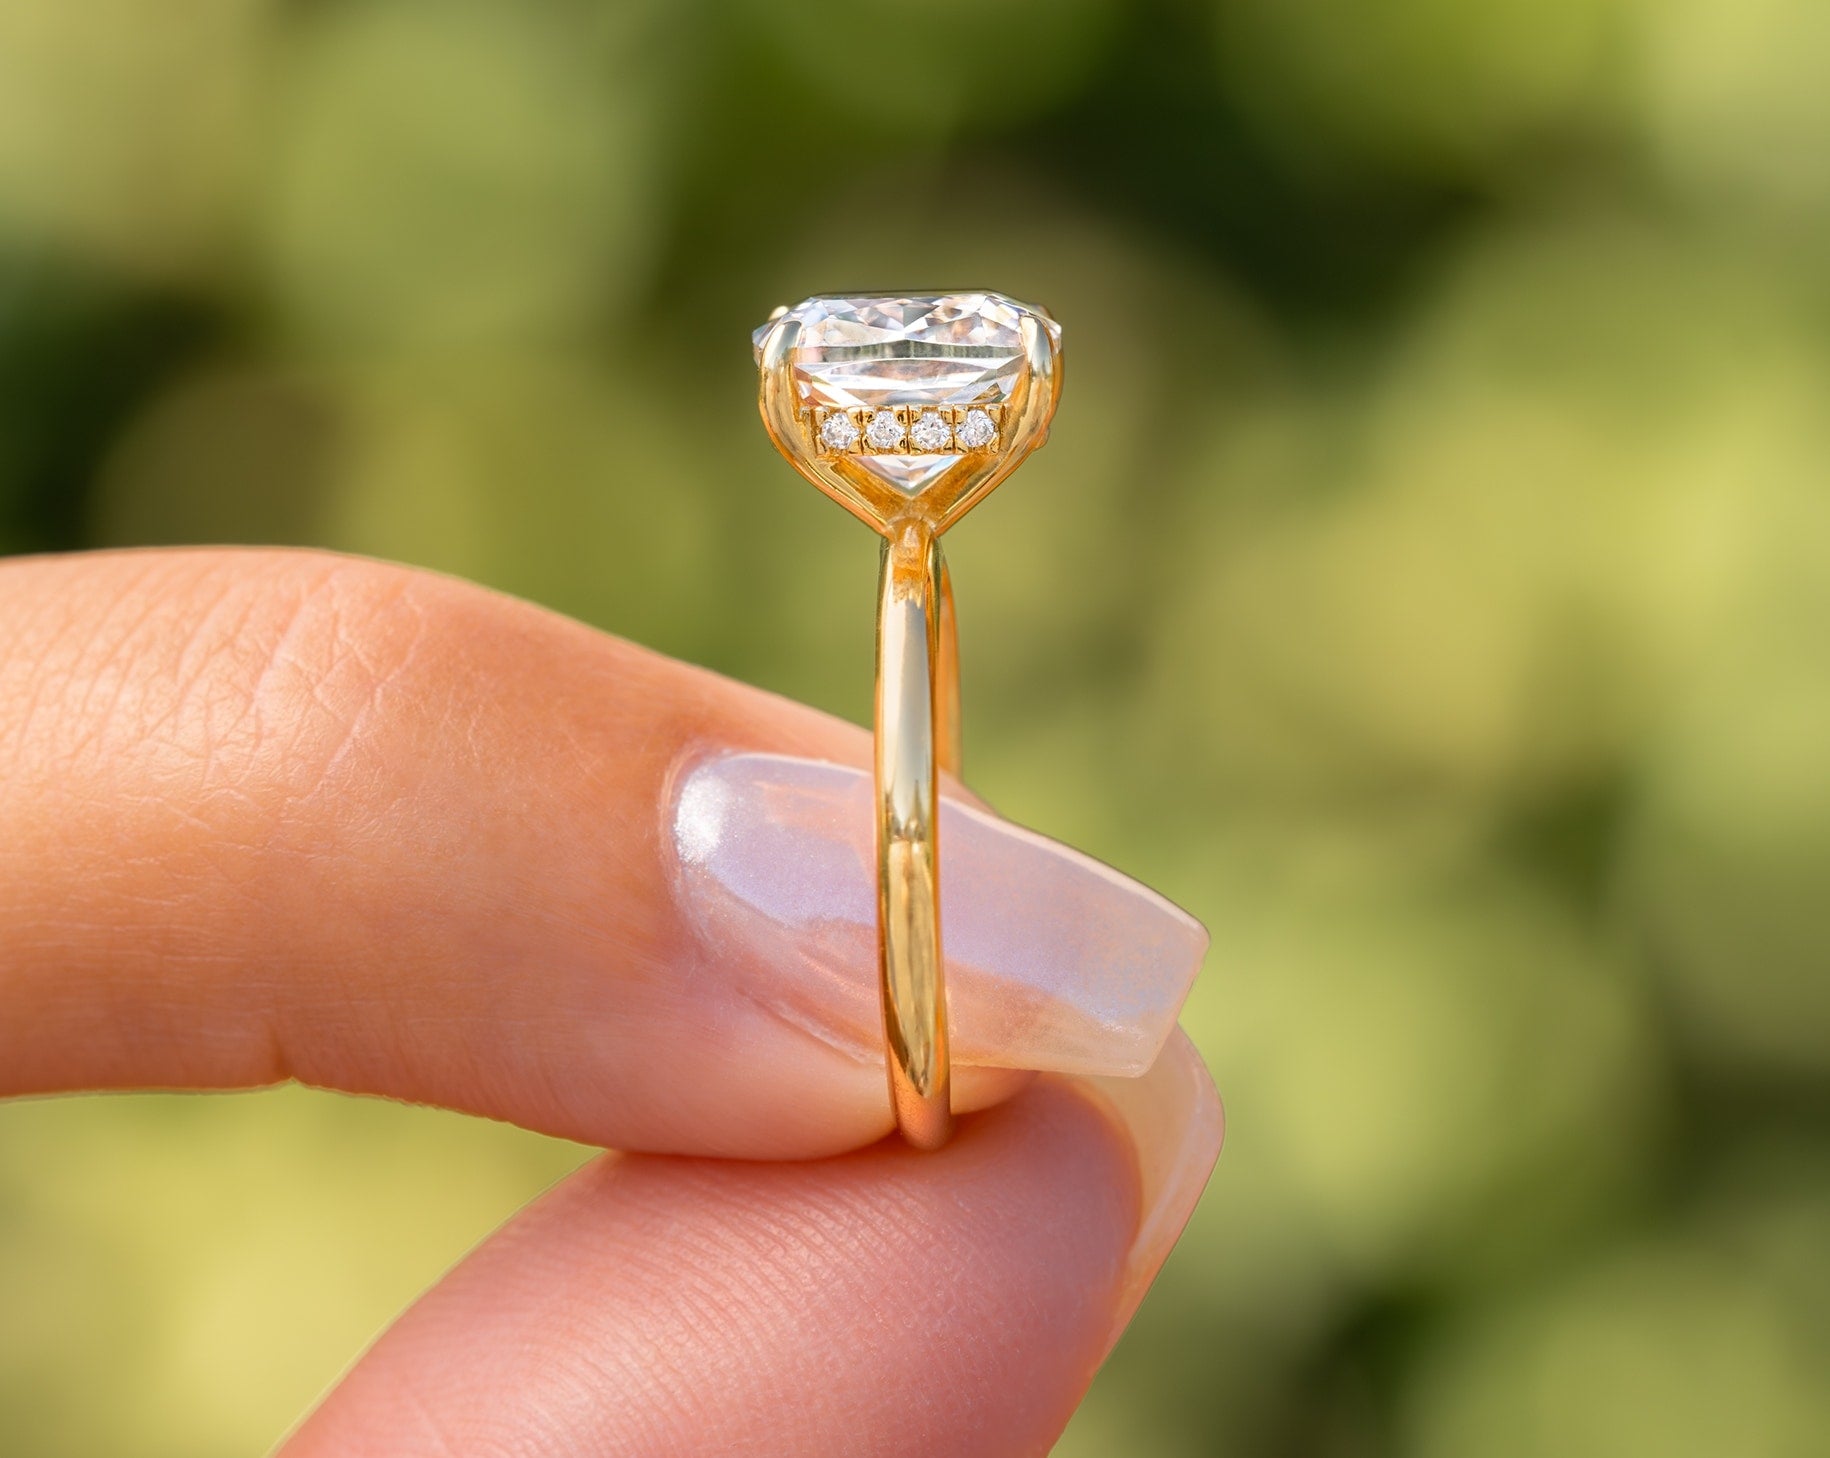 Rings - Wedding Rings for Women & Engagement Bands - Zamel's – Zamels